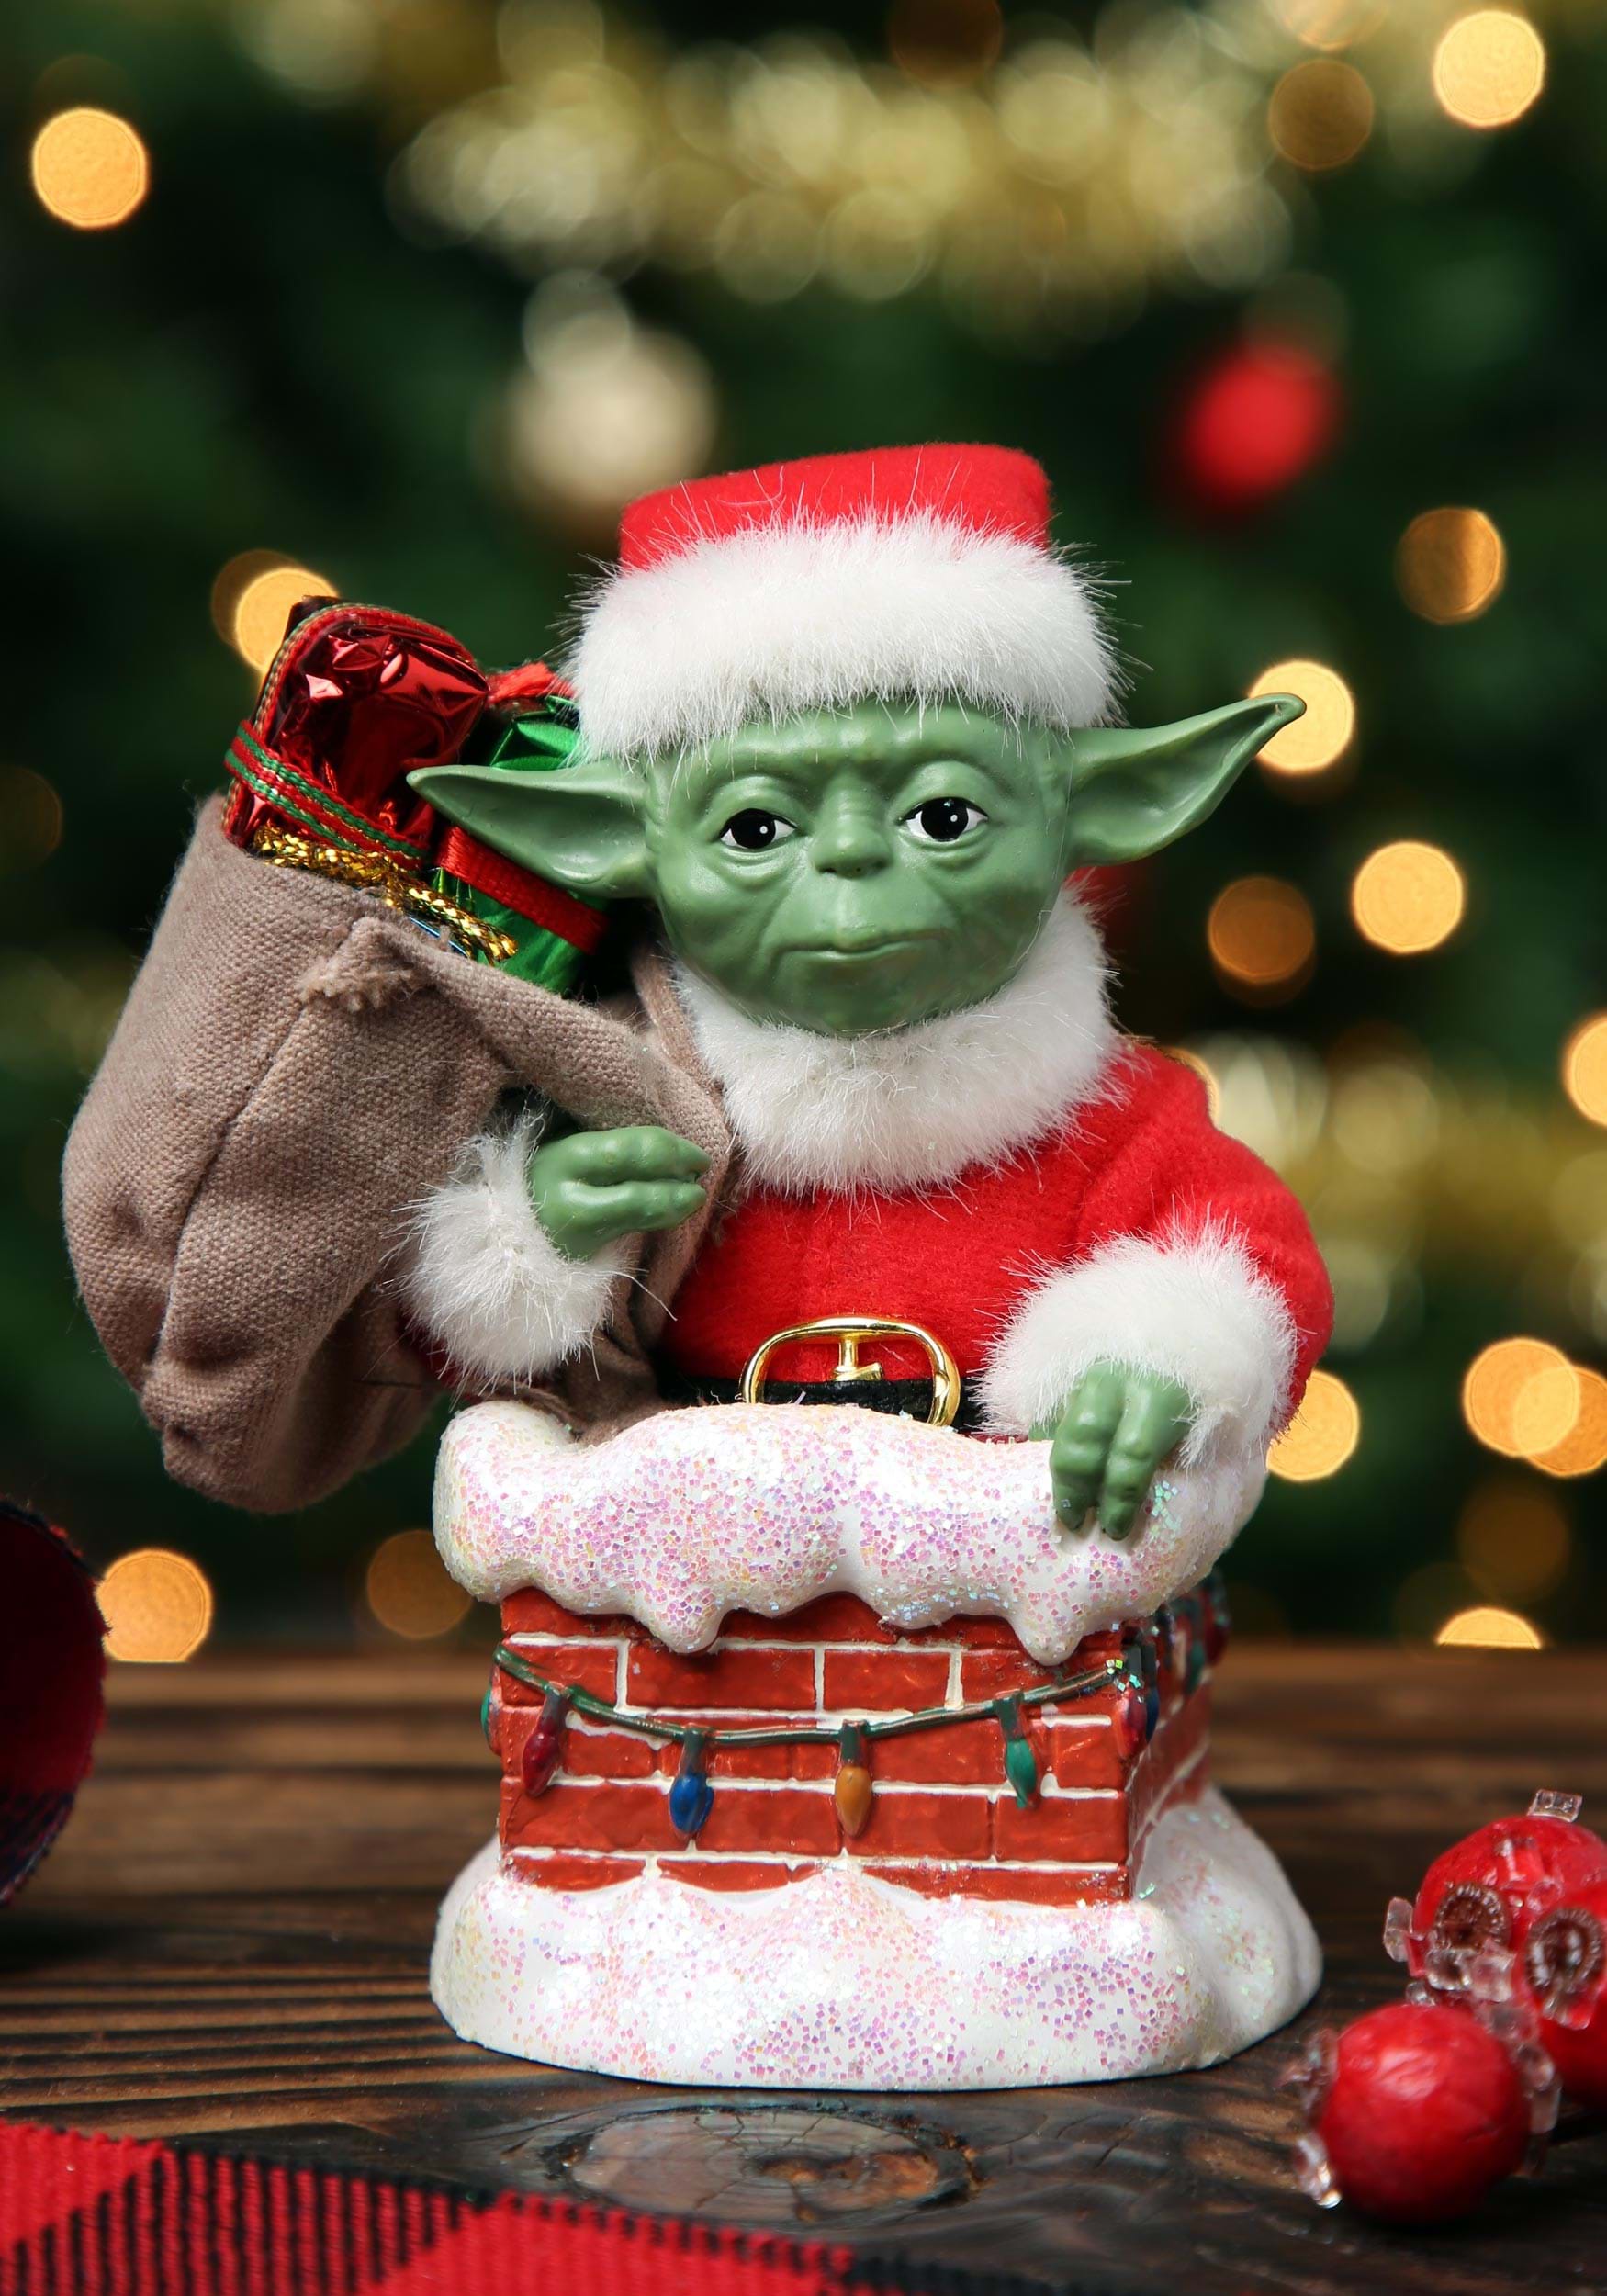 Star Wars: The Mandalorian Grogu Holiday Sweater Ceramic Camper